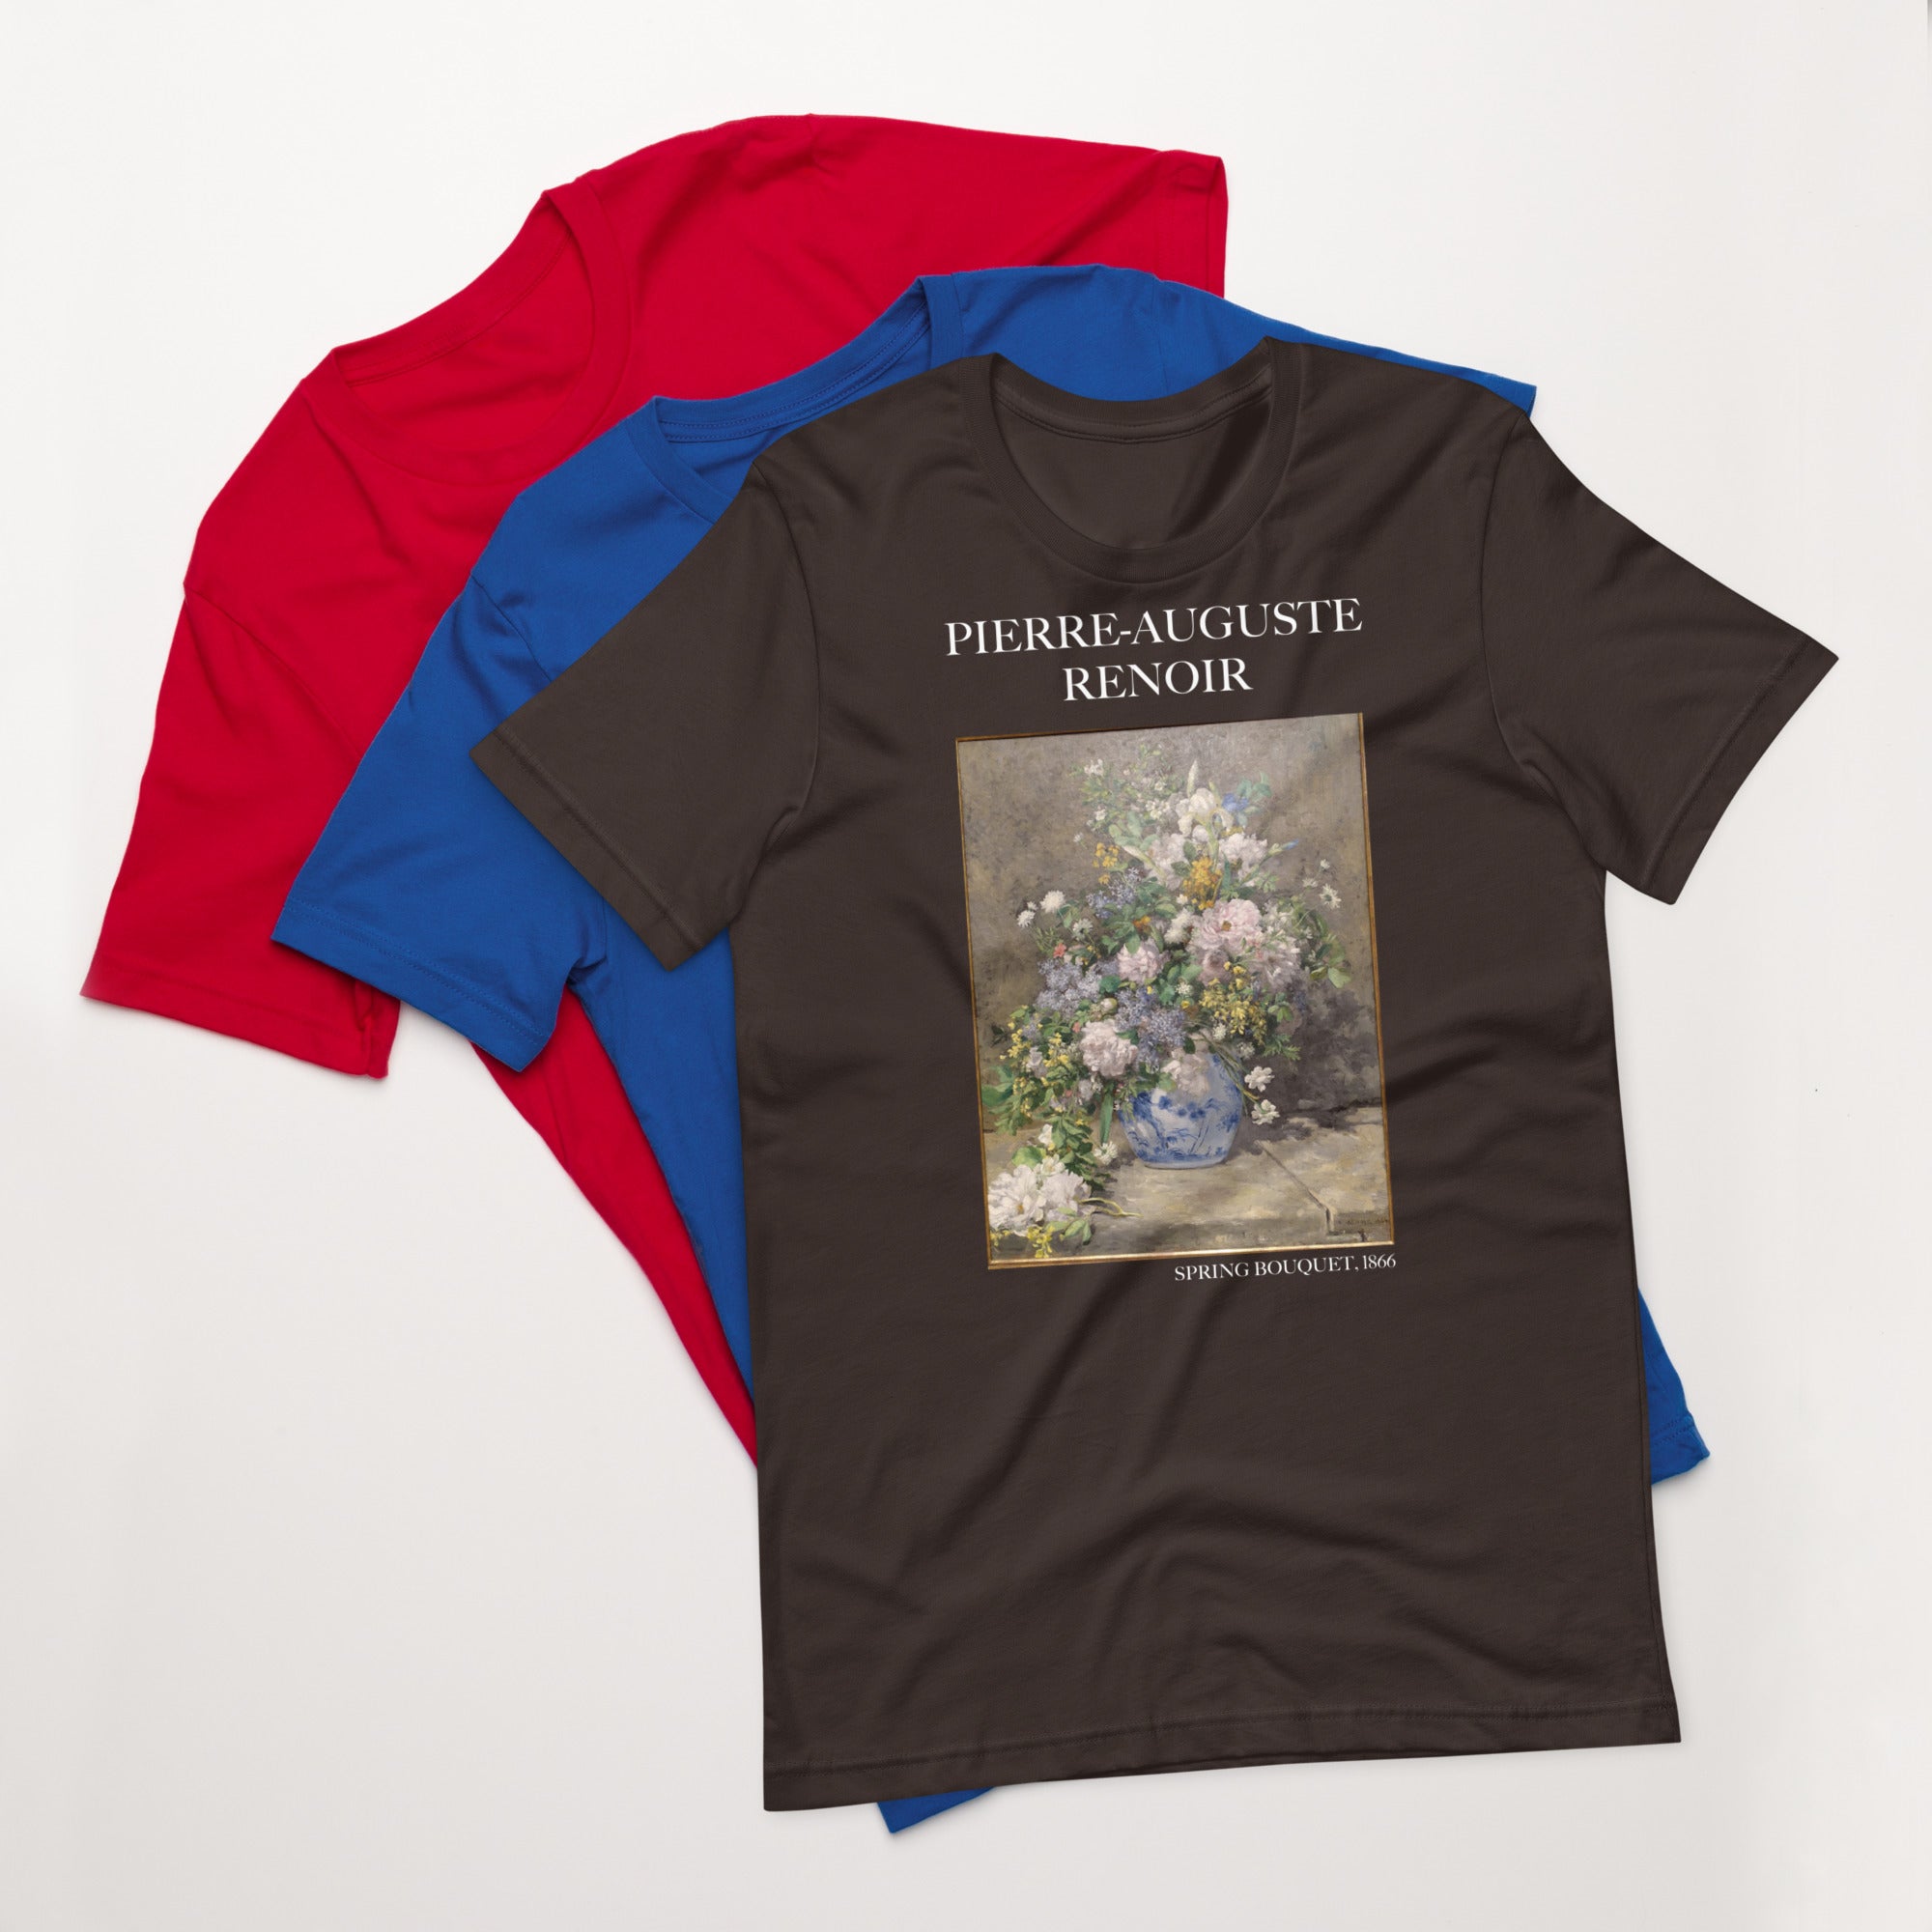 Pierre-Auguste Renoir 'Frühlingsstrauß' Berühmtes Gemälde T-Shirt | Unisex Klassisches Kunst-T-Shirt